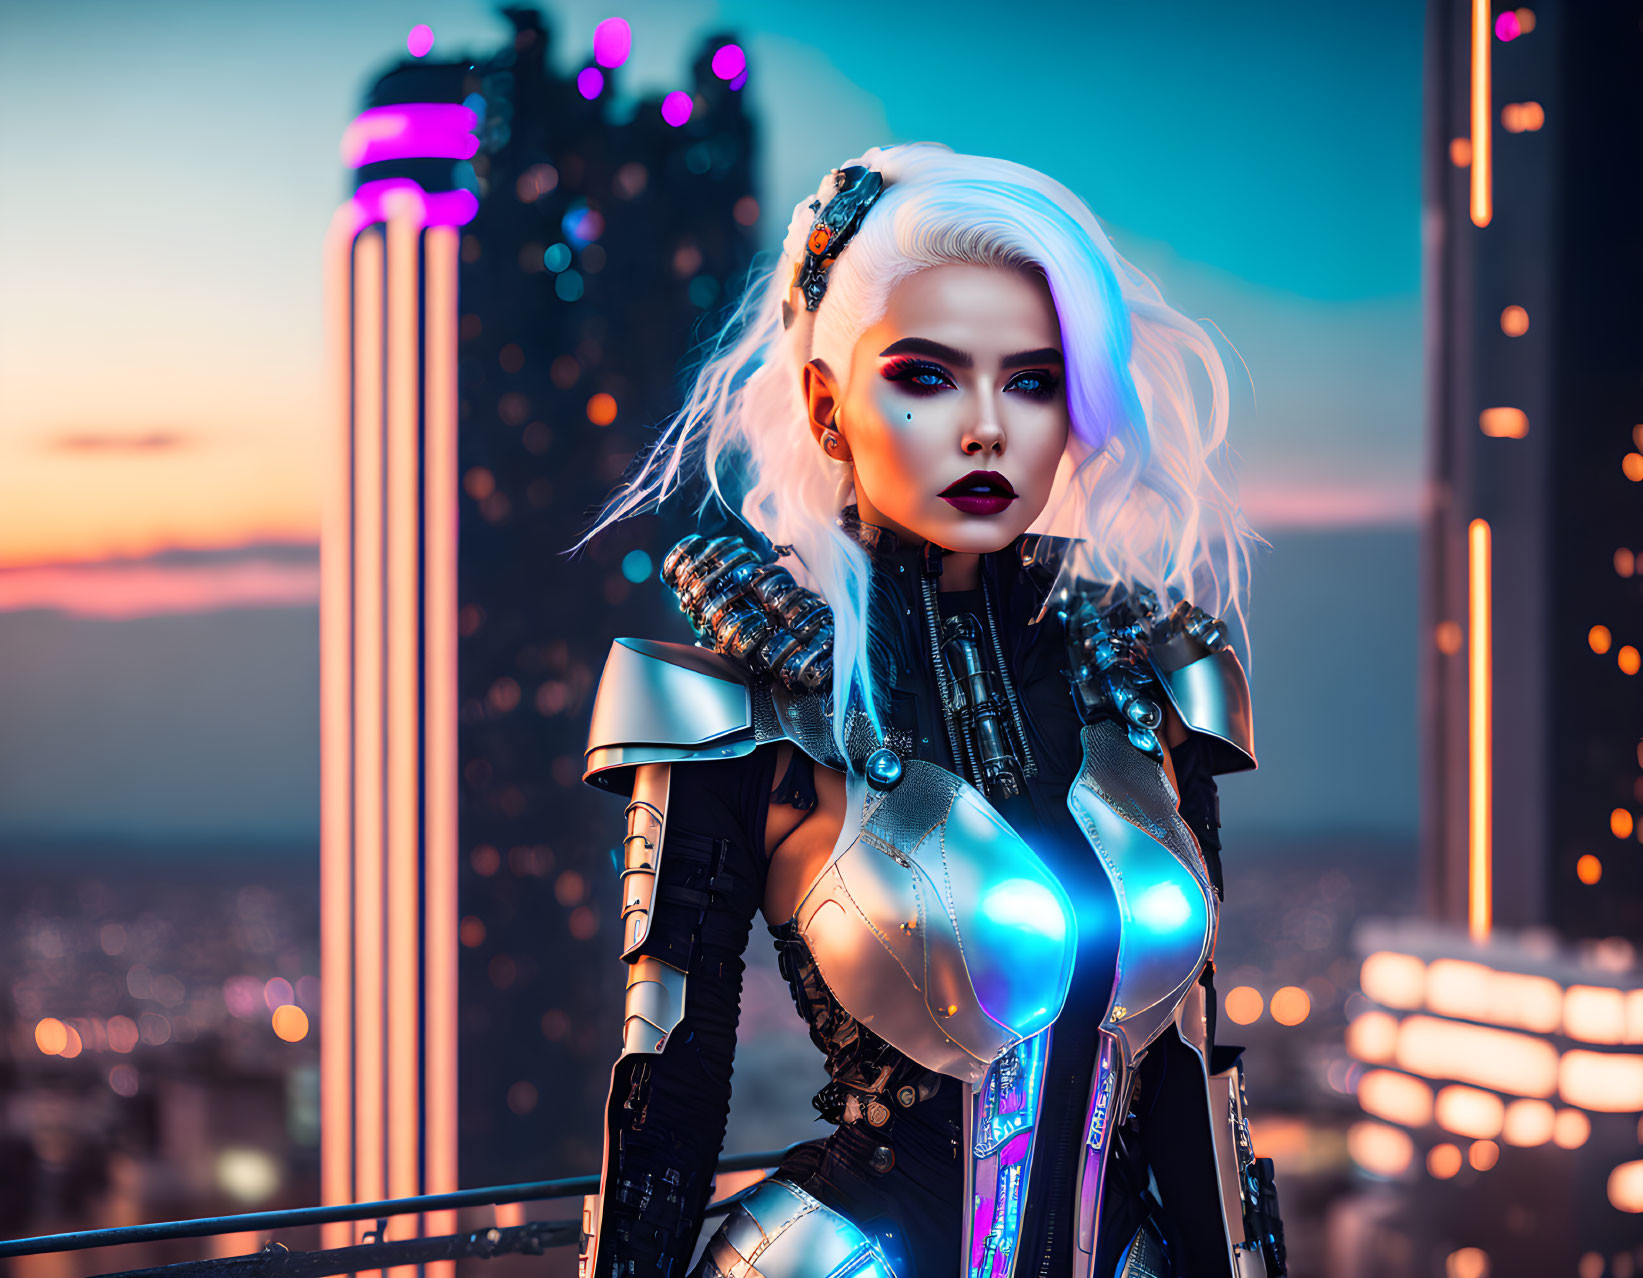 Cyberpunk girl on a rooftop